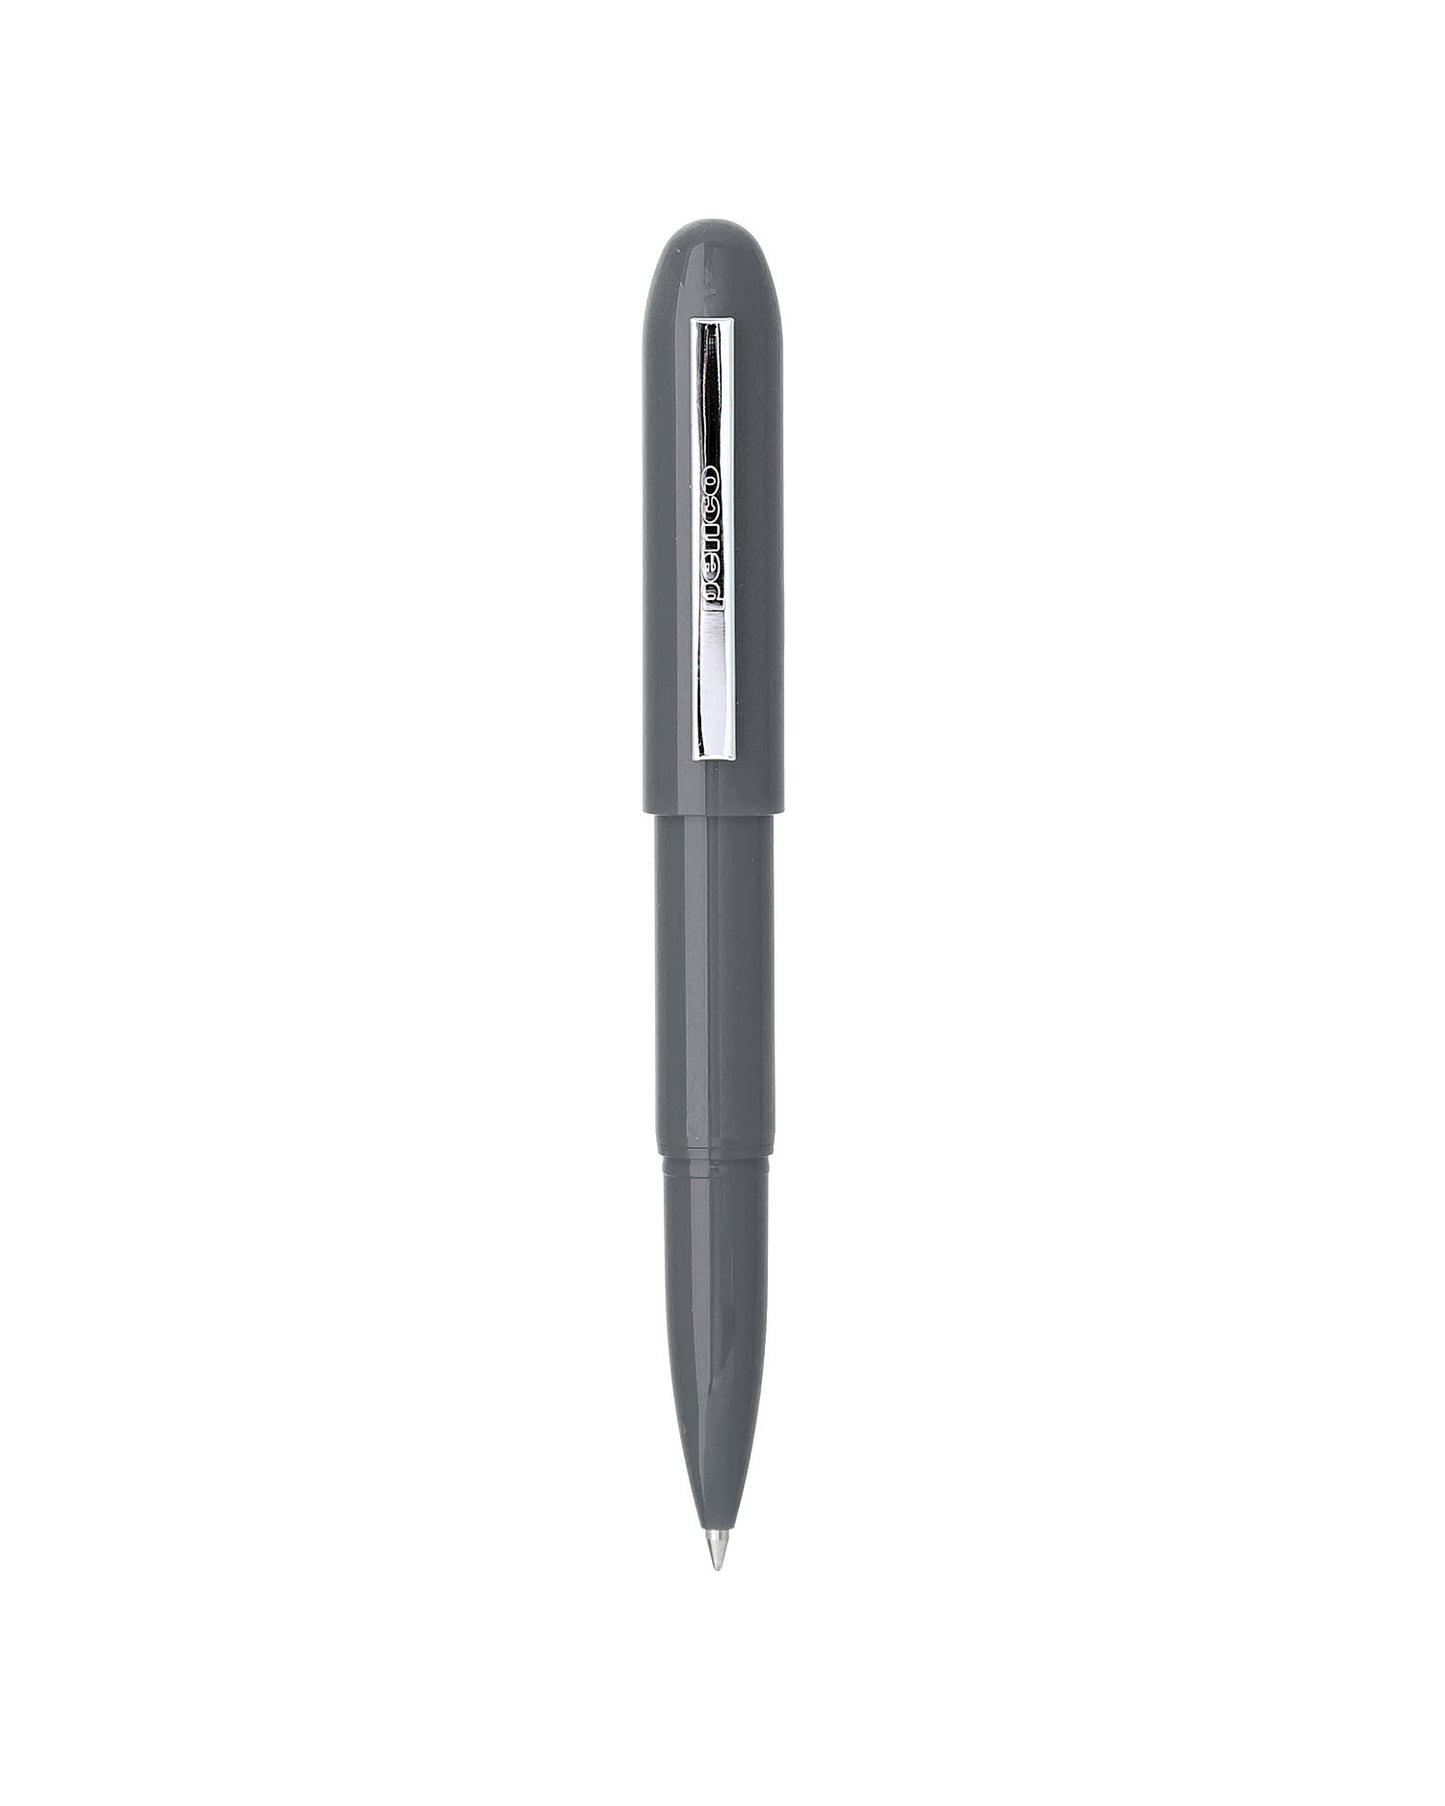 Gray bullet pen, plastic, Penco brand.